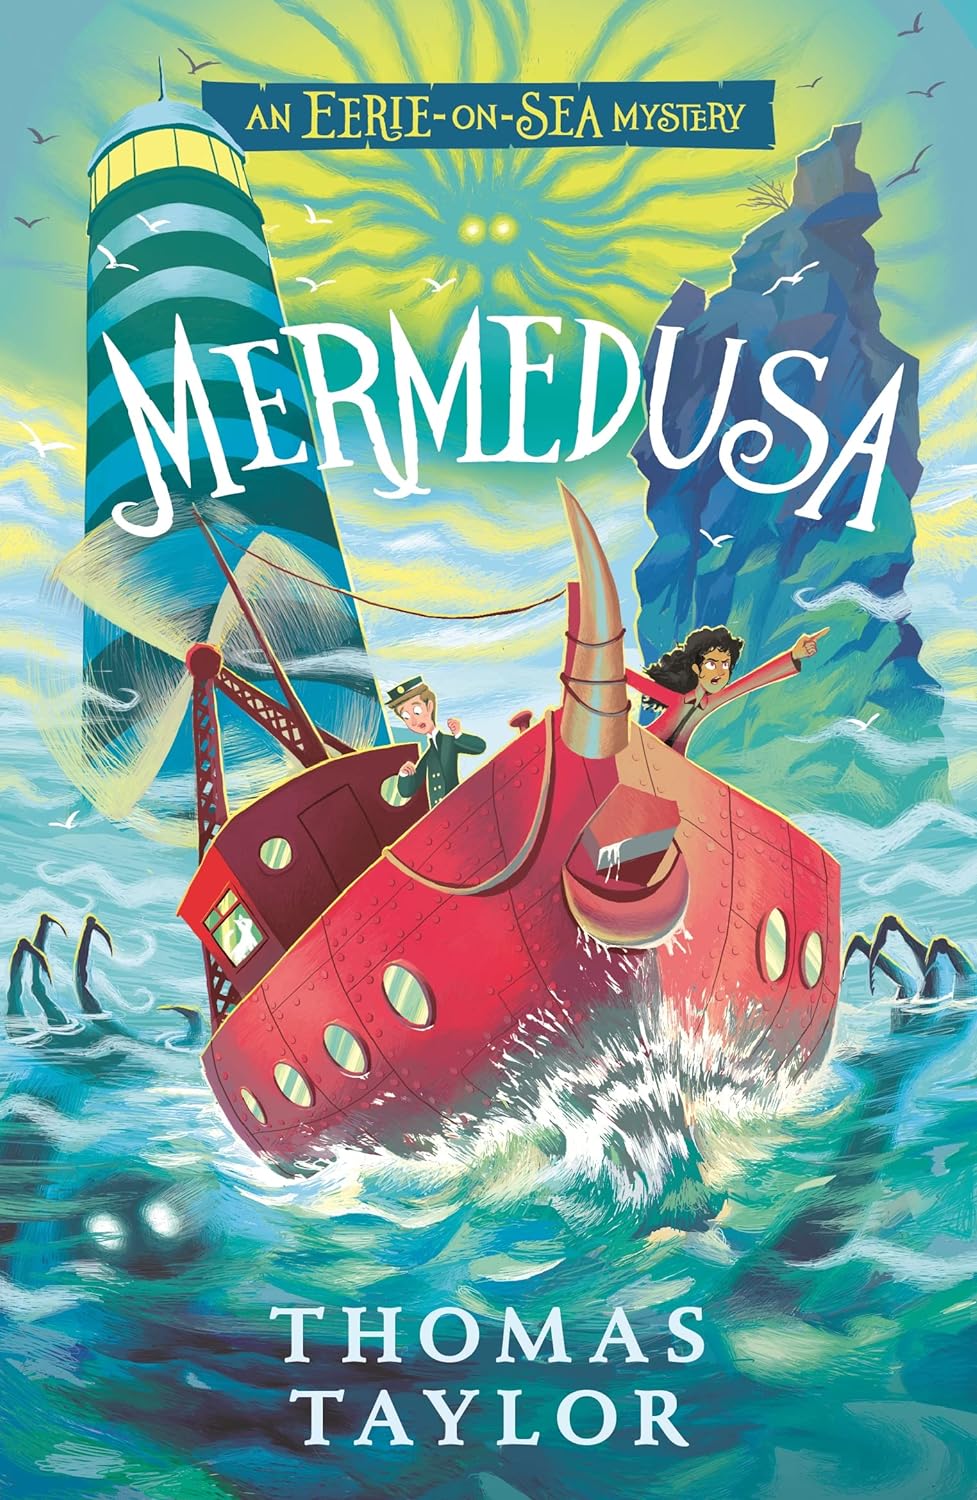 Mermedusa (A Eerie-on-Sea Mystery)